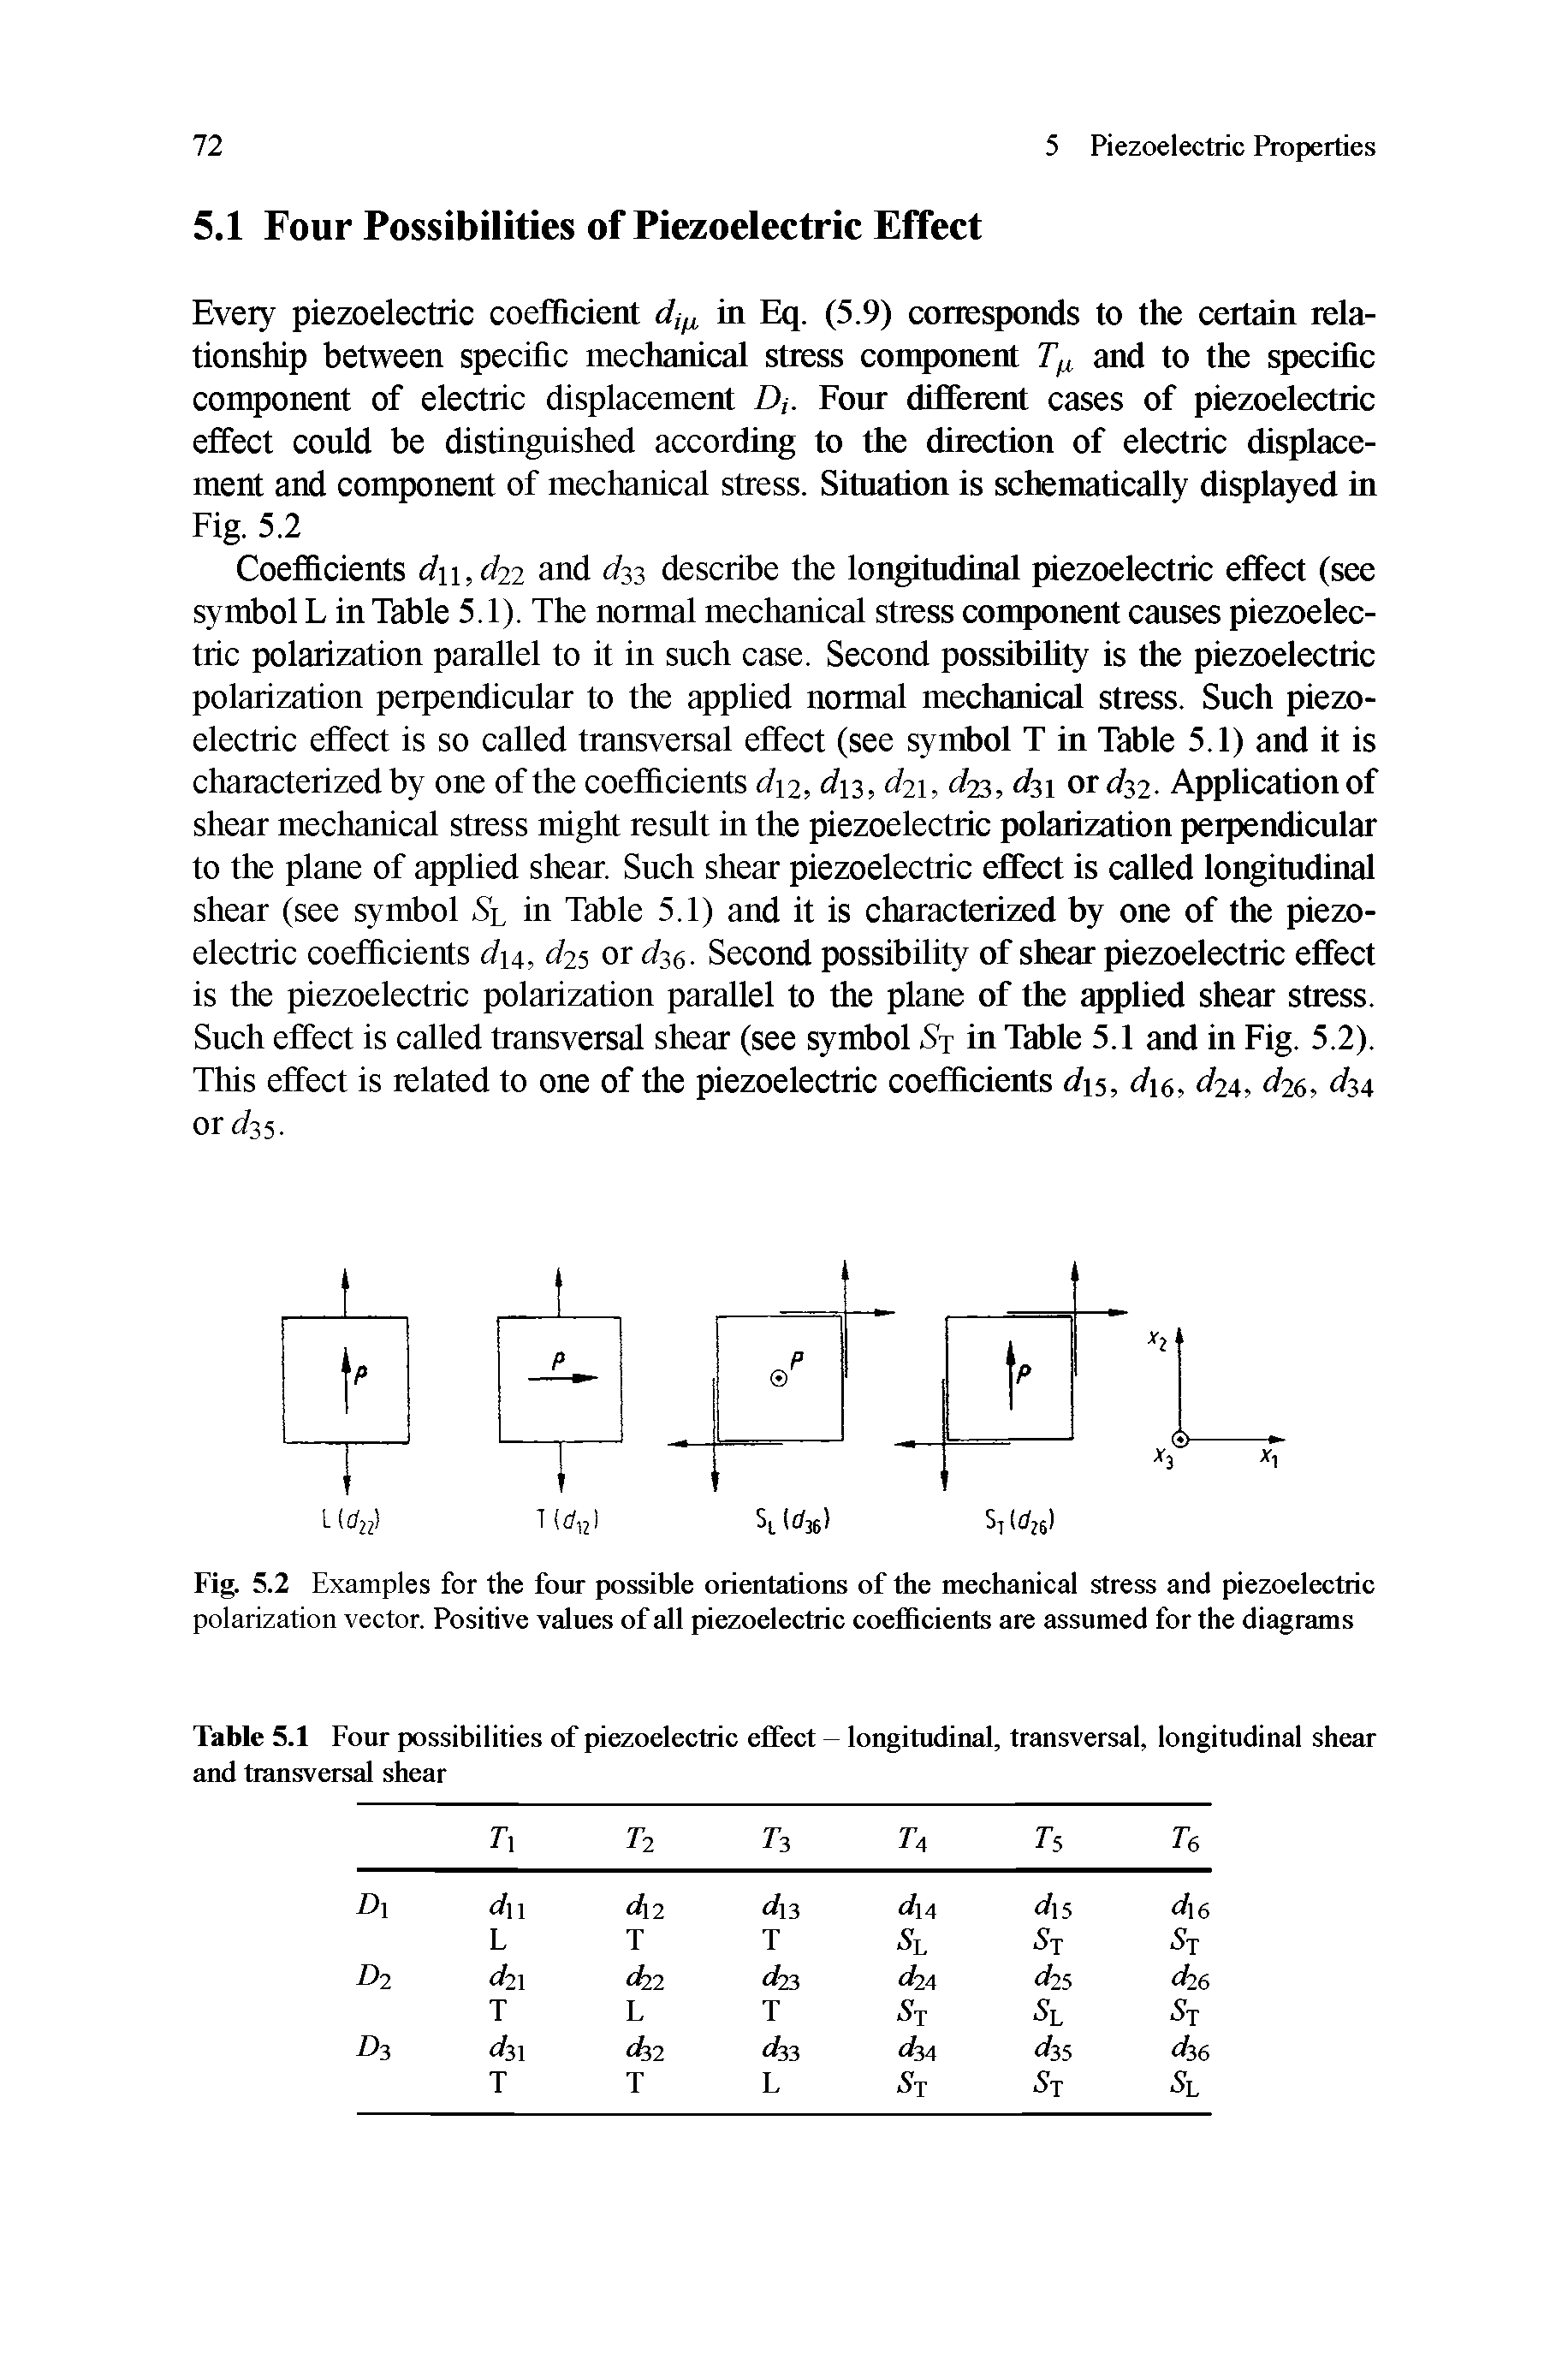 Table 5.1 Four possibilities of piezoelectric effect - longitudinal, transversal, longitudinal shear and transversal shear...